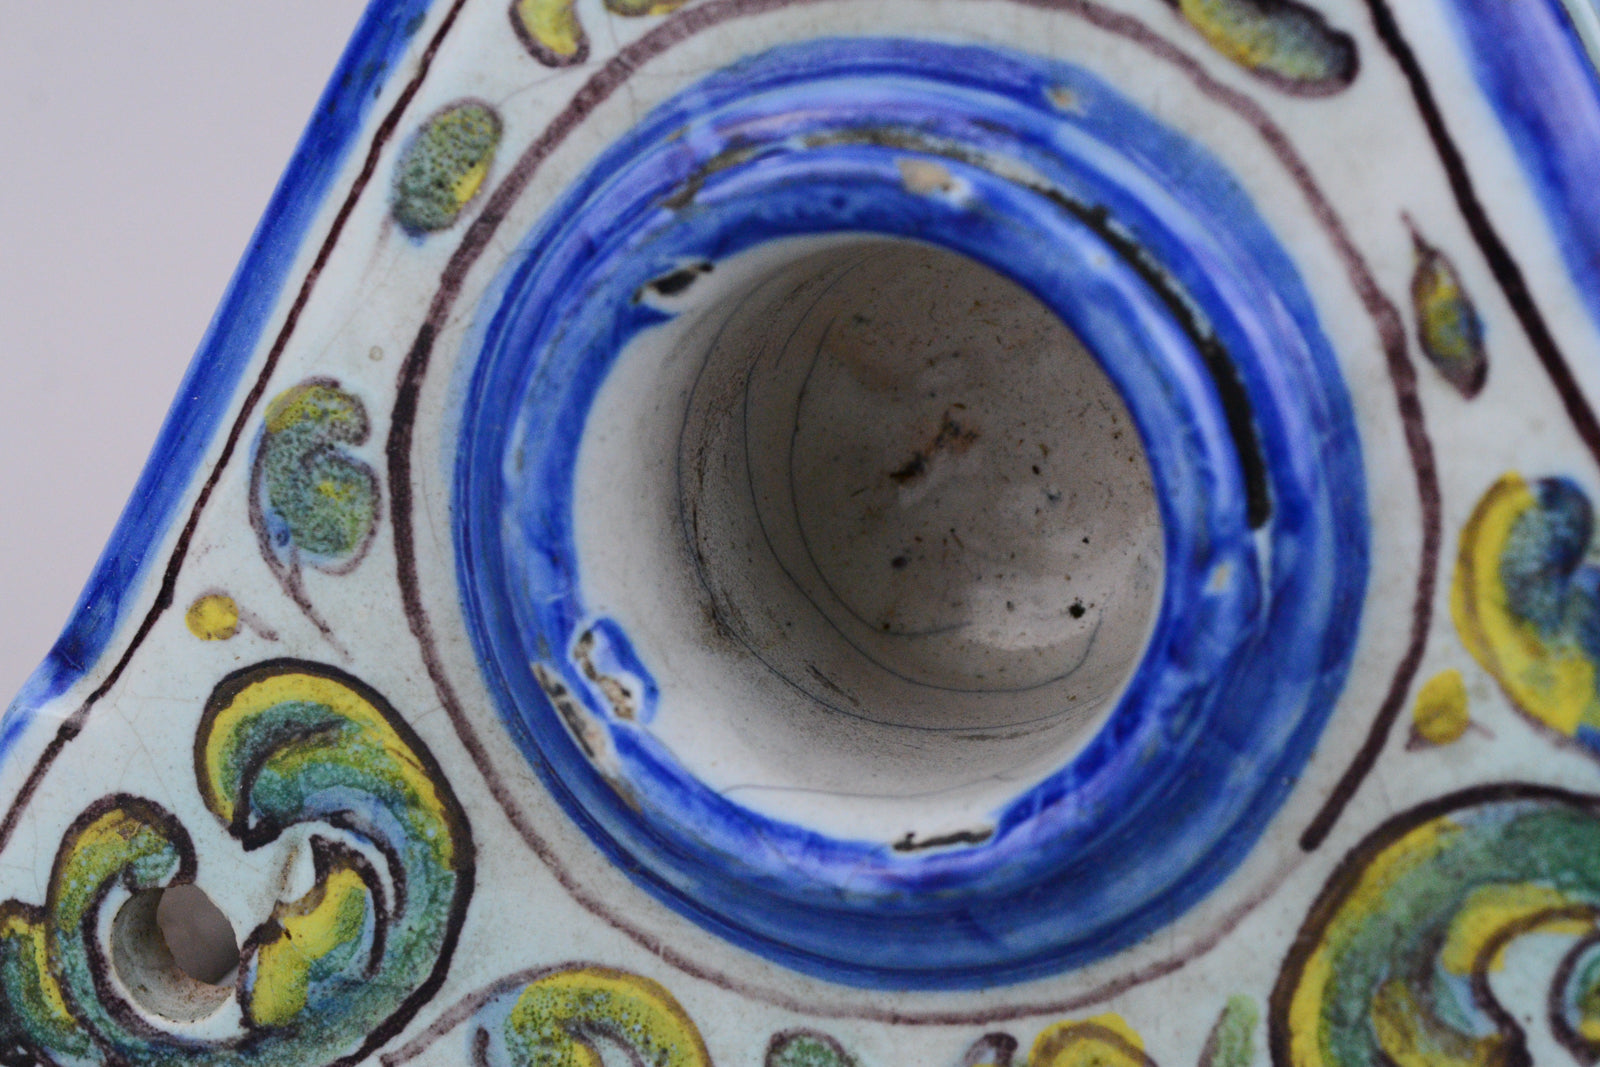 Antique Spanish Talavera Pottery Inkwell